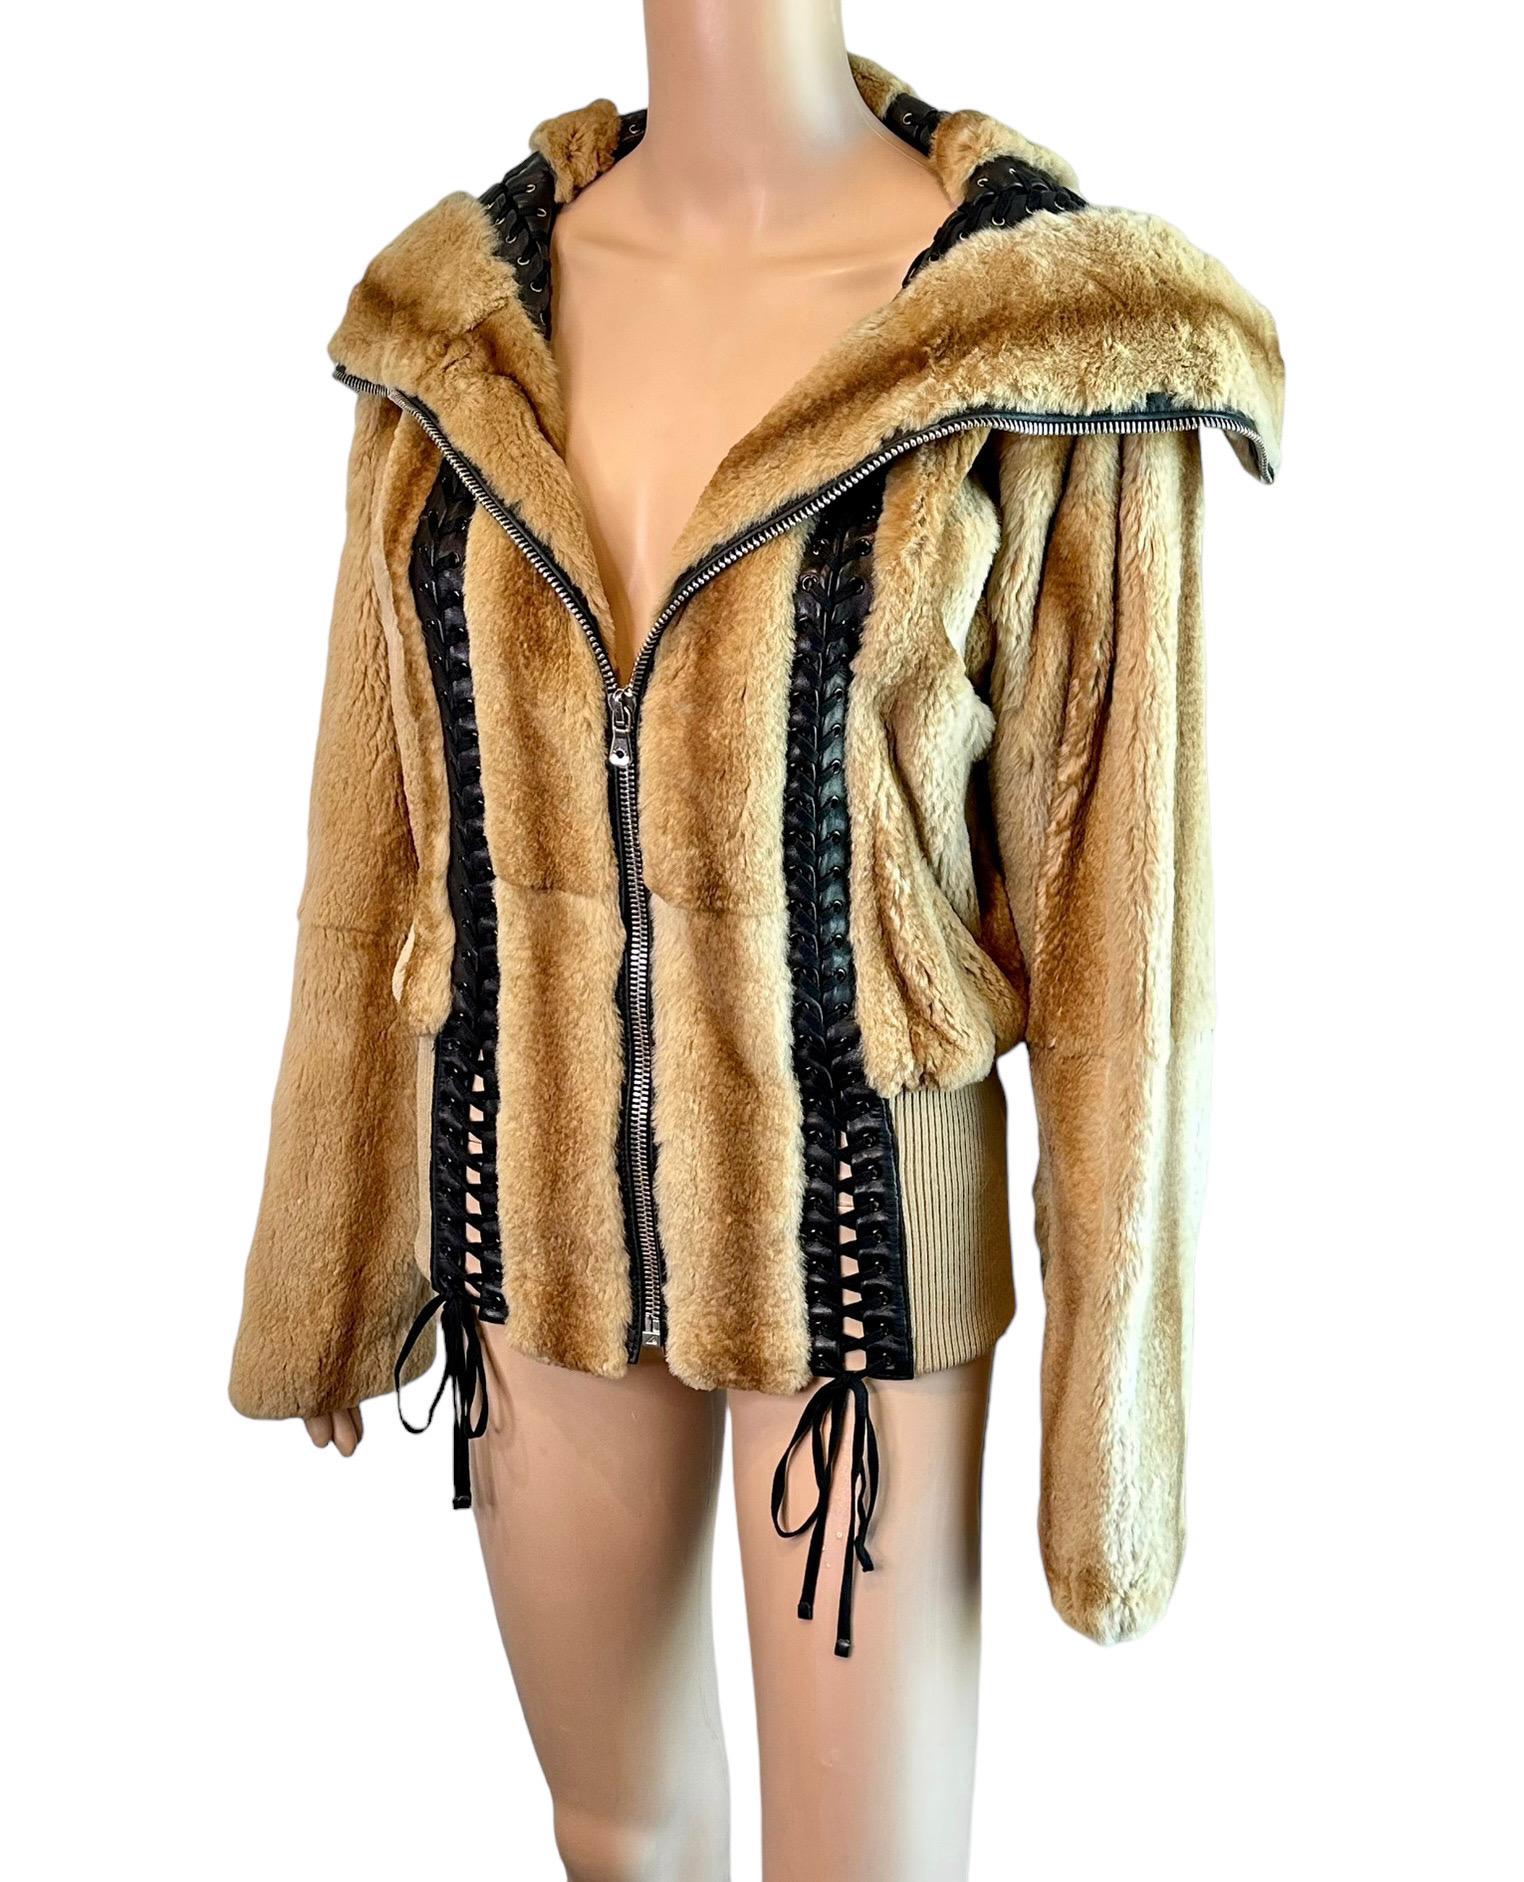 Dolce & Gabbana S/S 2003 Bondage Lace Up Weasel Fur Jacket Coat IT 40

FOLLOW US ON INSTAGRAM @OPULENTADDICT